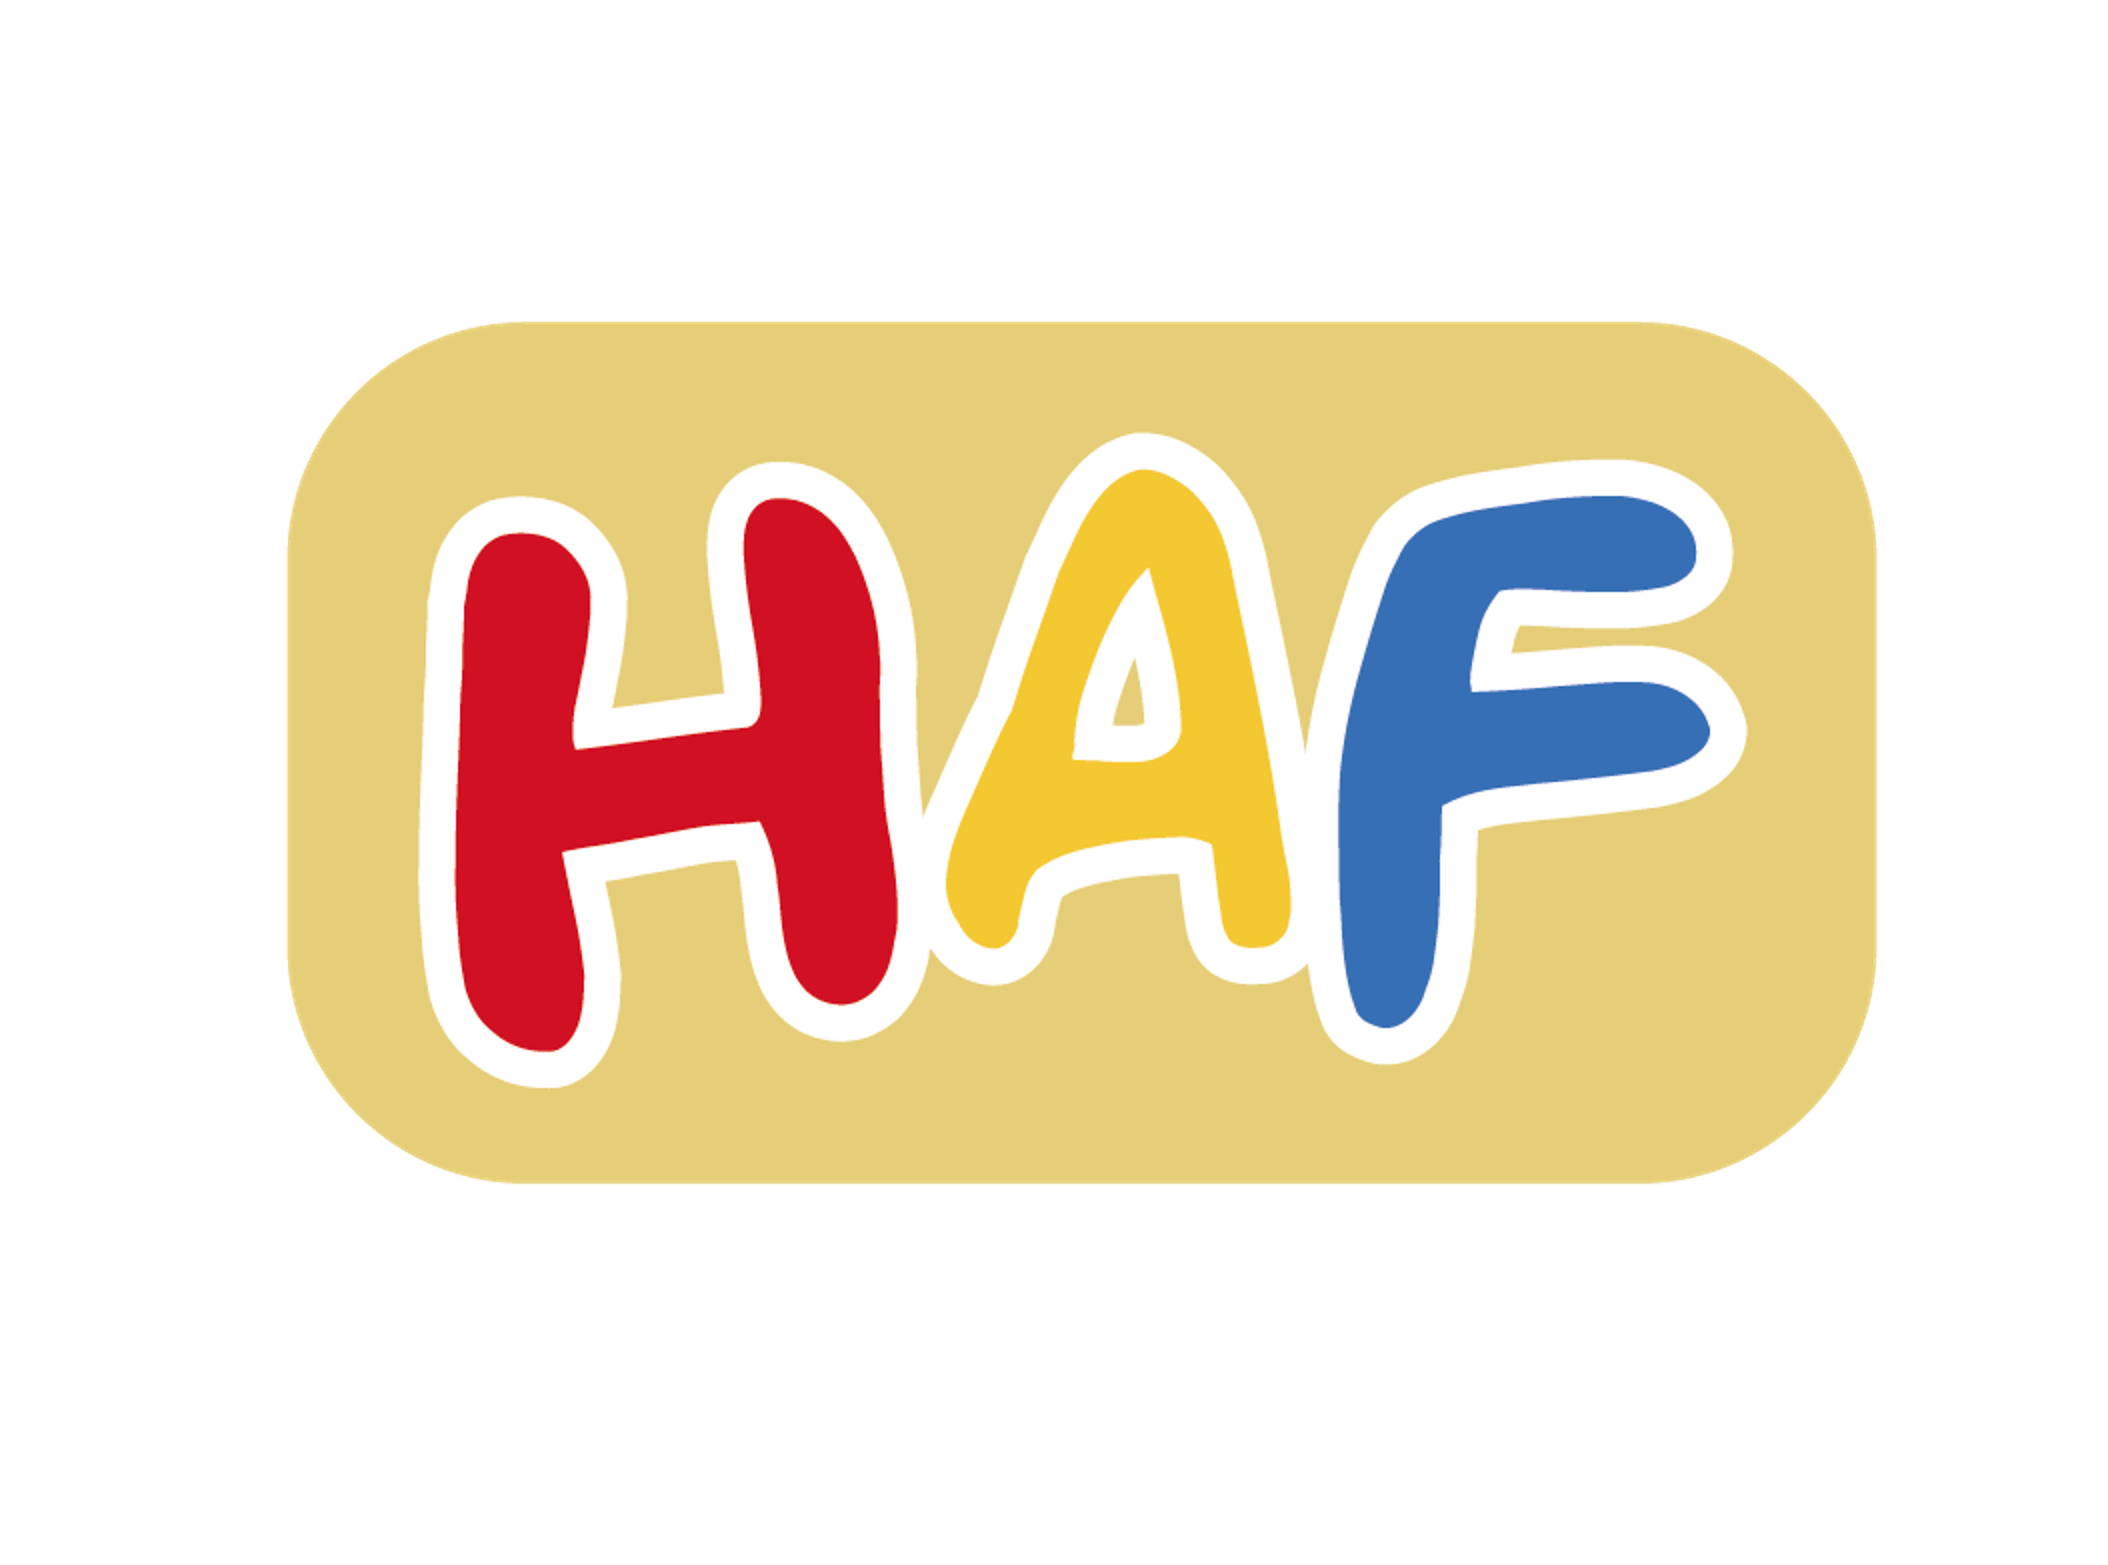 The Warwickshire HAF logo